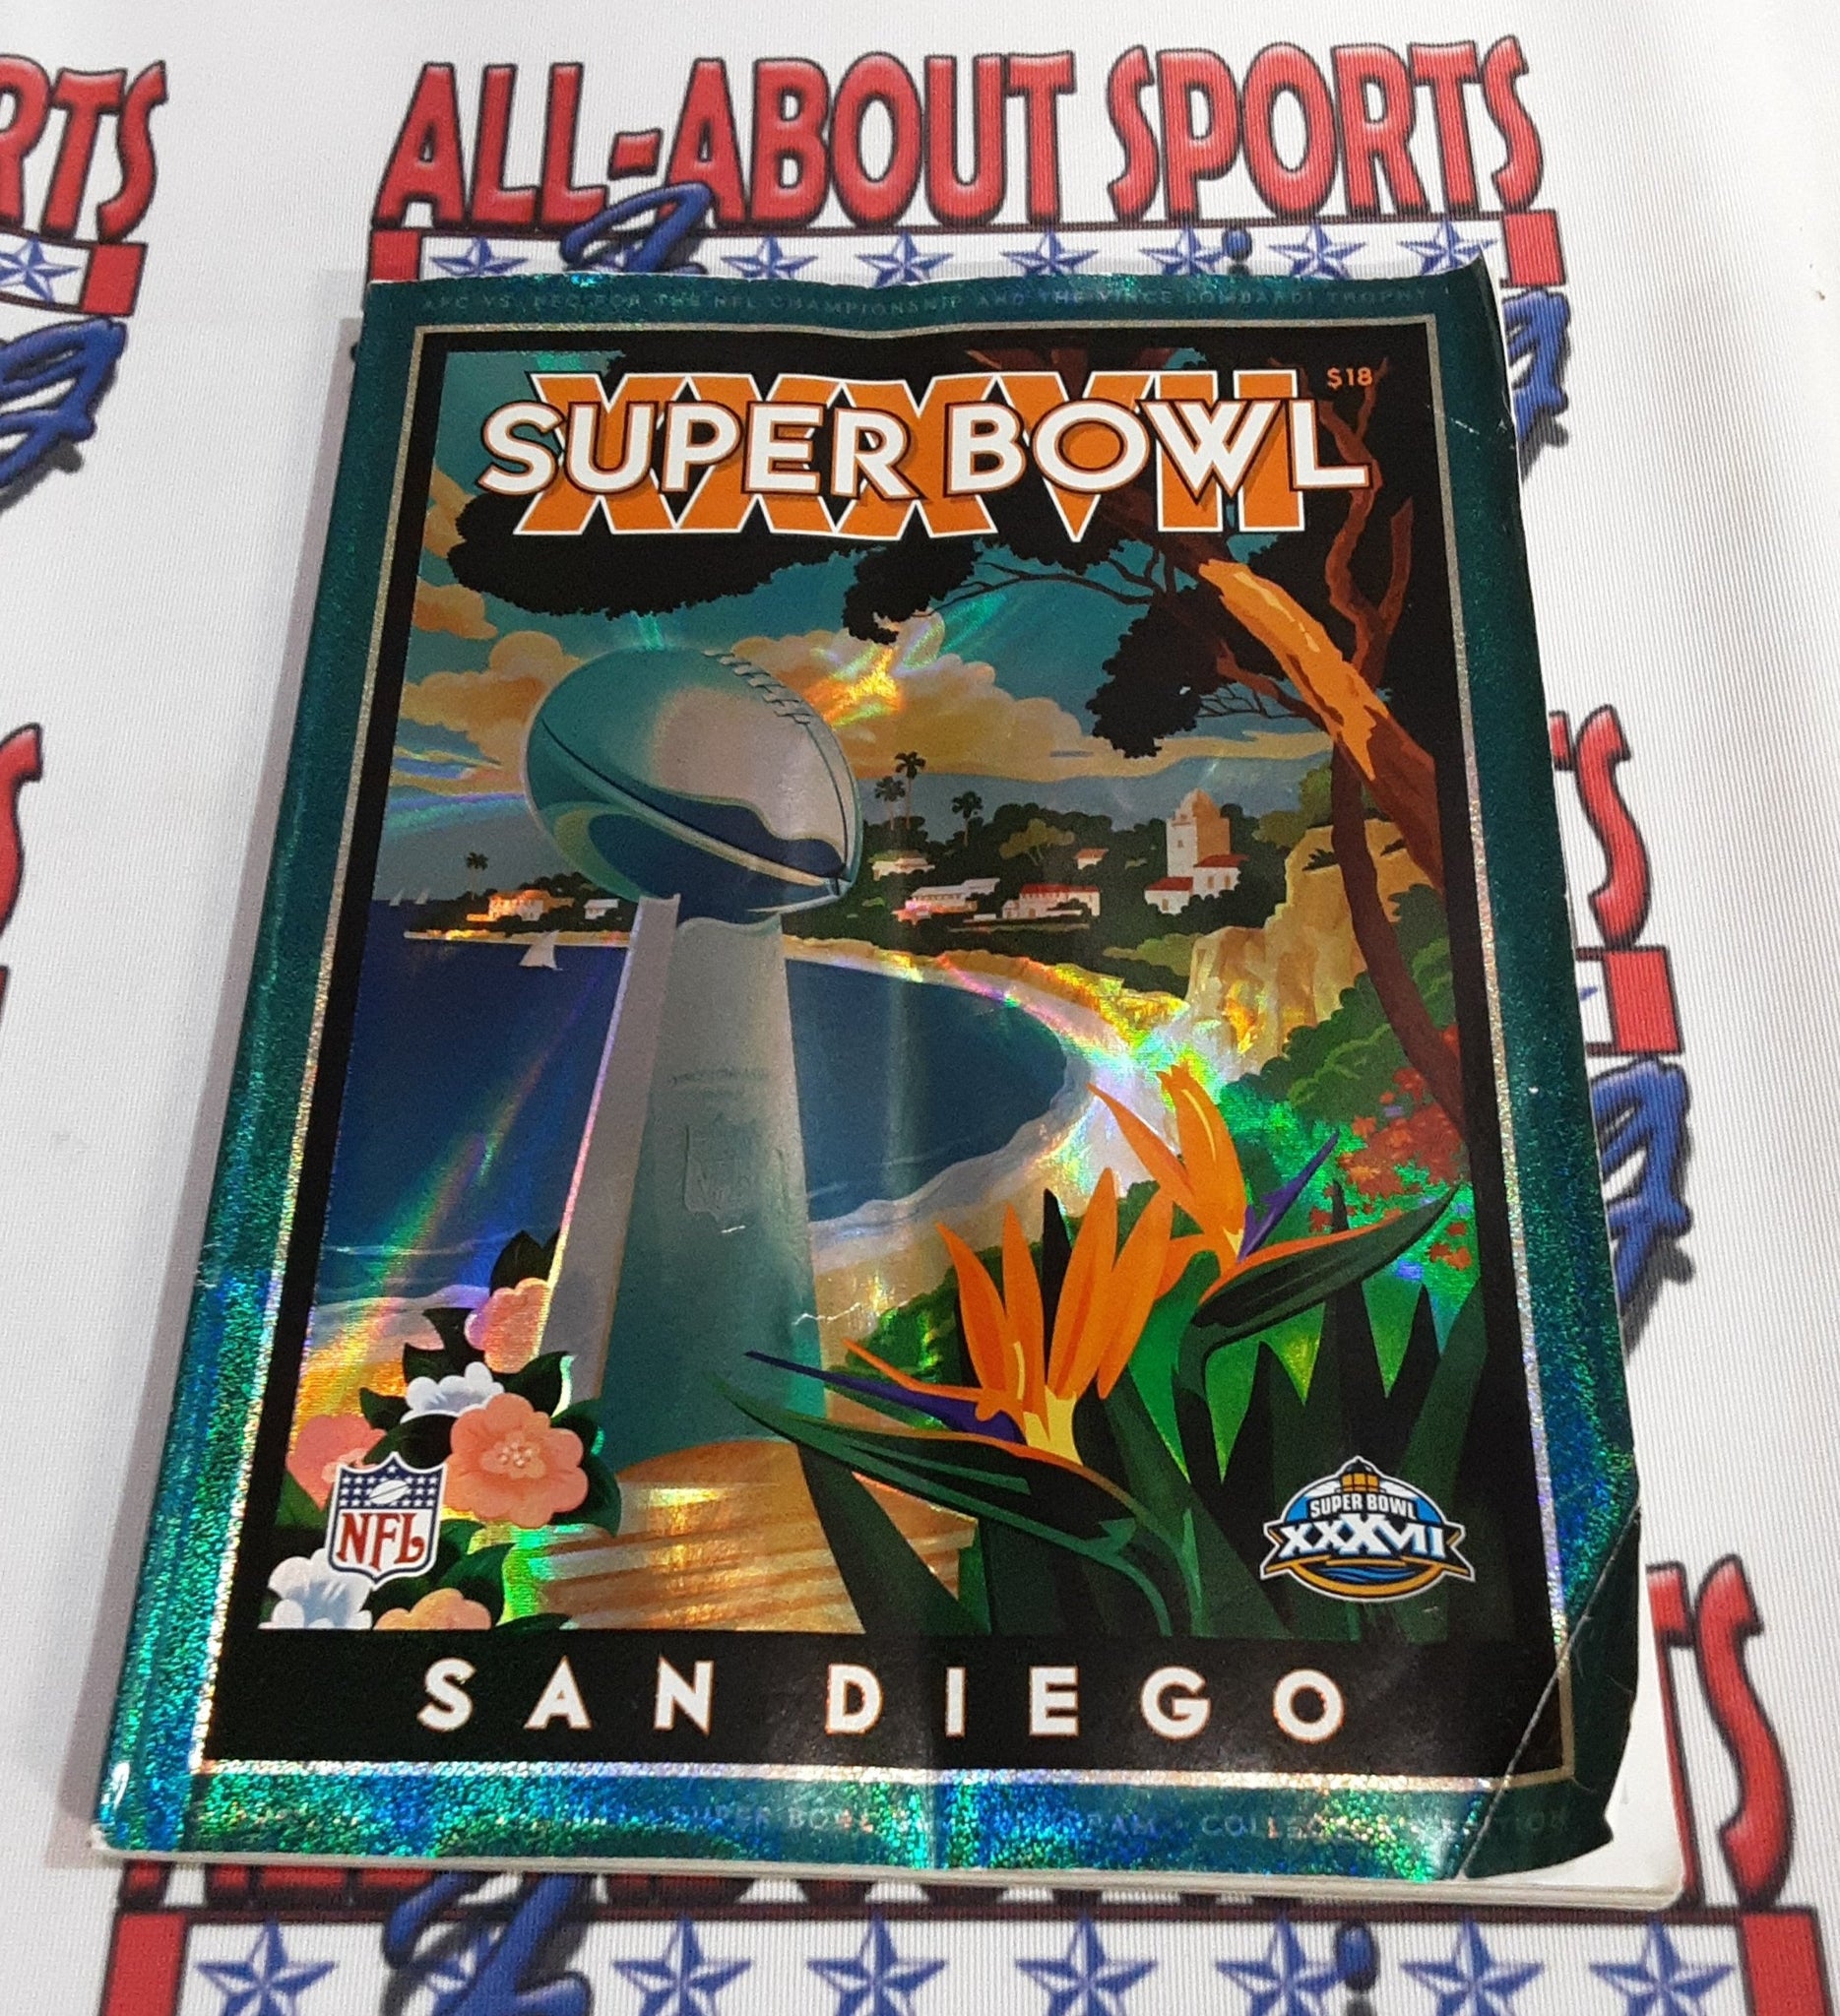 Super Bowl XXXVII Tickets and Game Program, Collector's Edition Qualcomm Stadium, San Diego